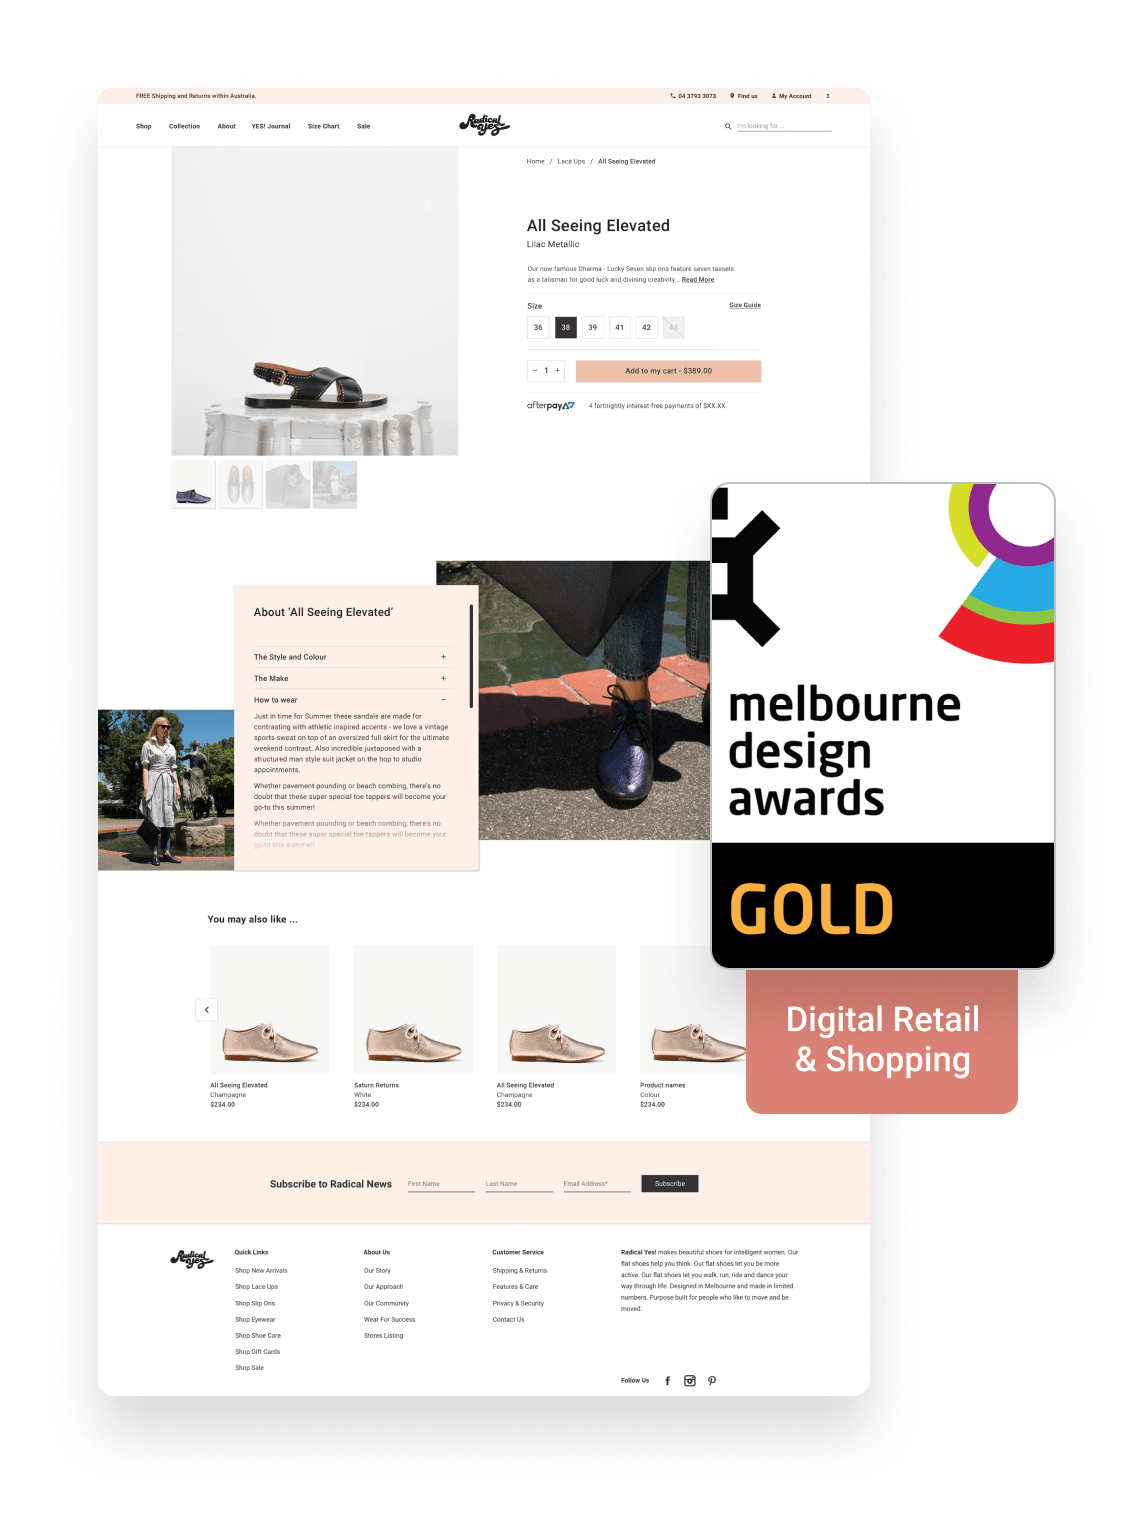 Website screen and Melbourne design awards gold logo